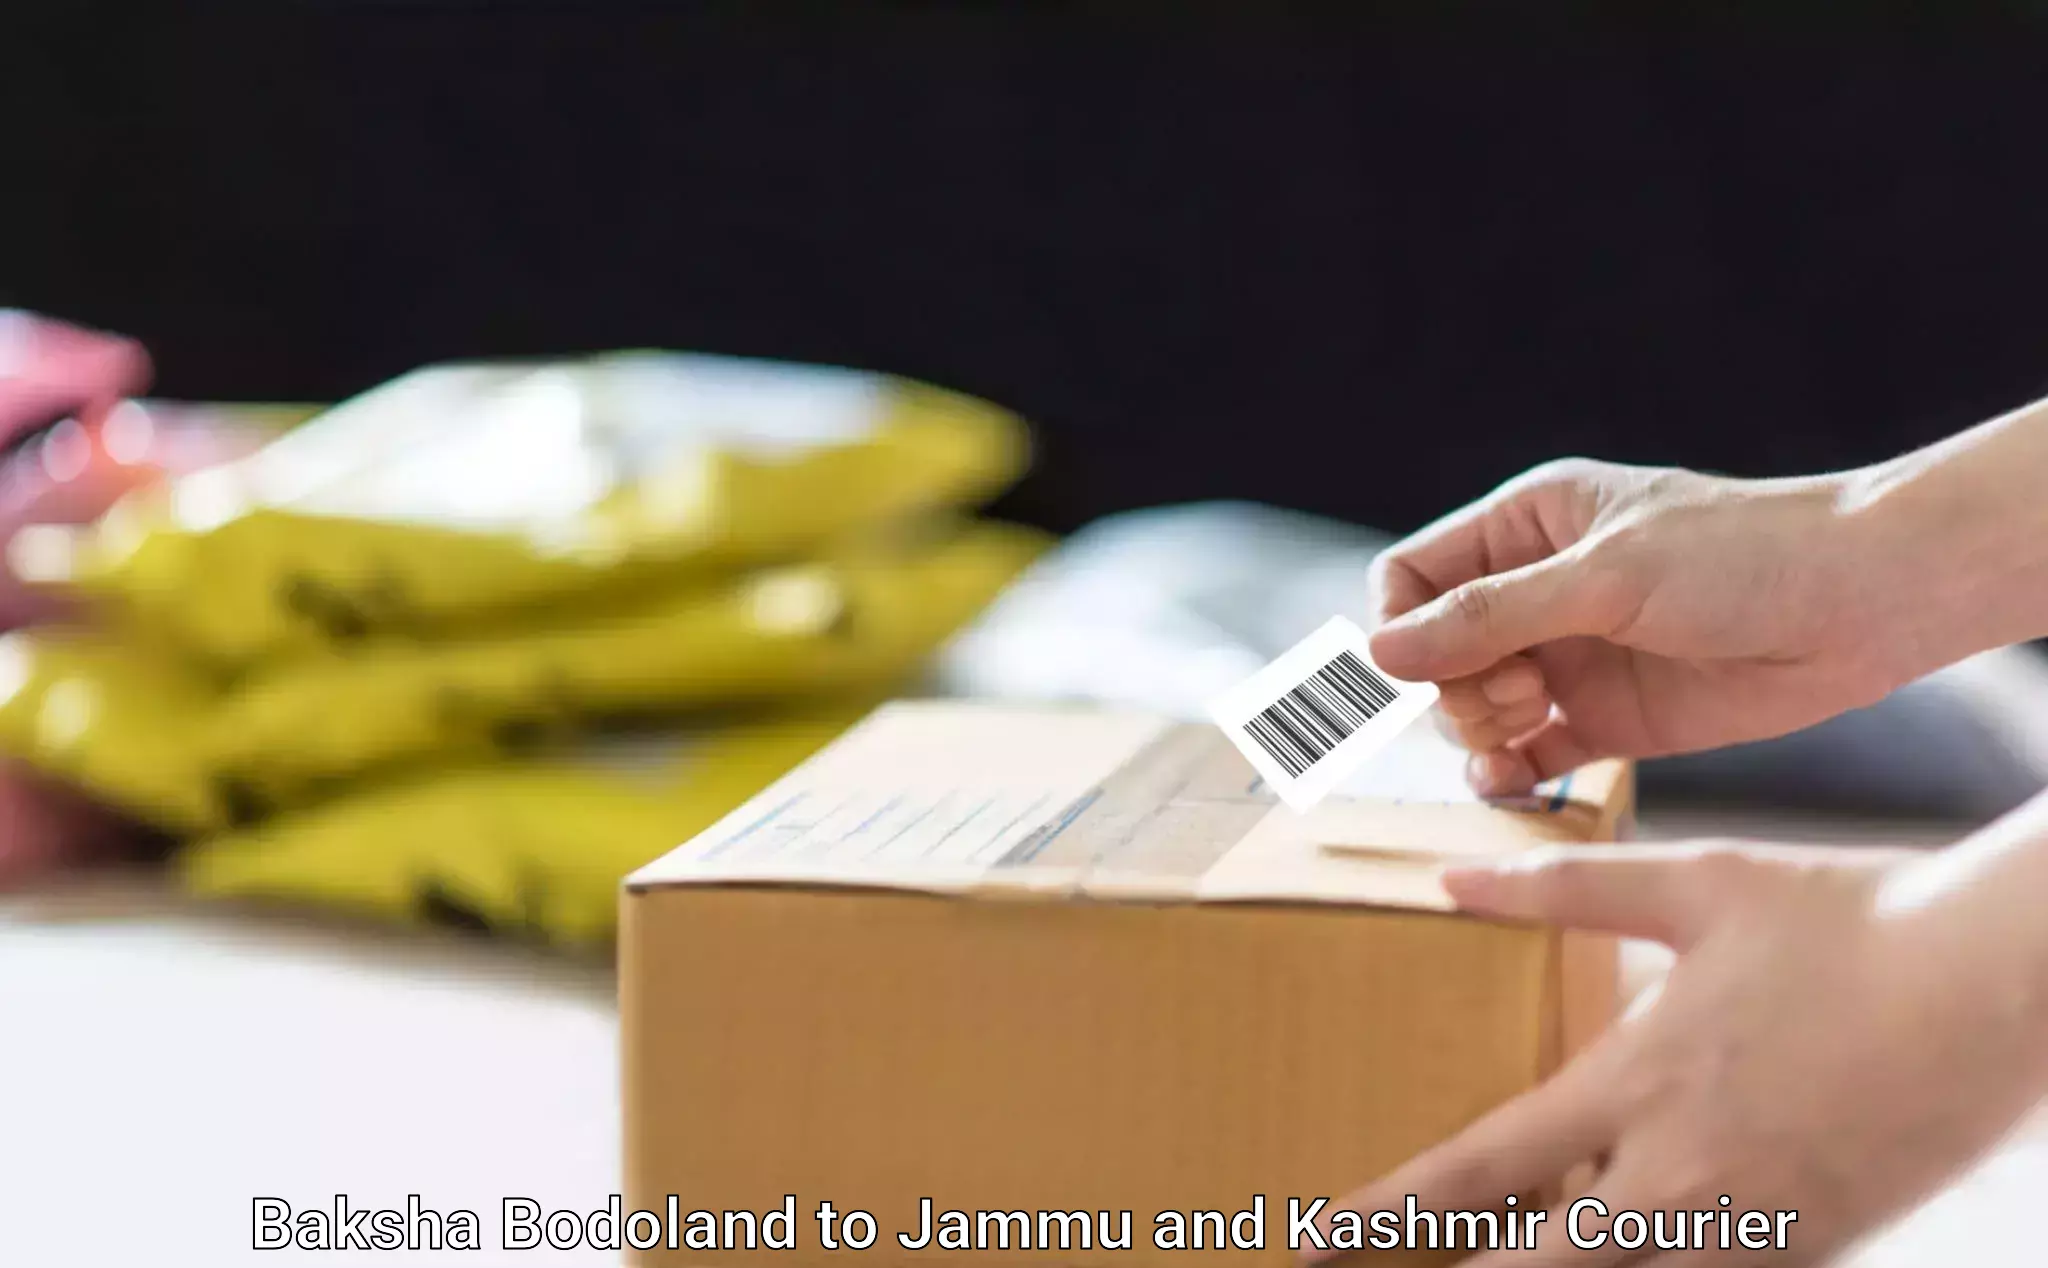 Courier service innovation Baksha Bodoland to Srinagar Kashmir